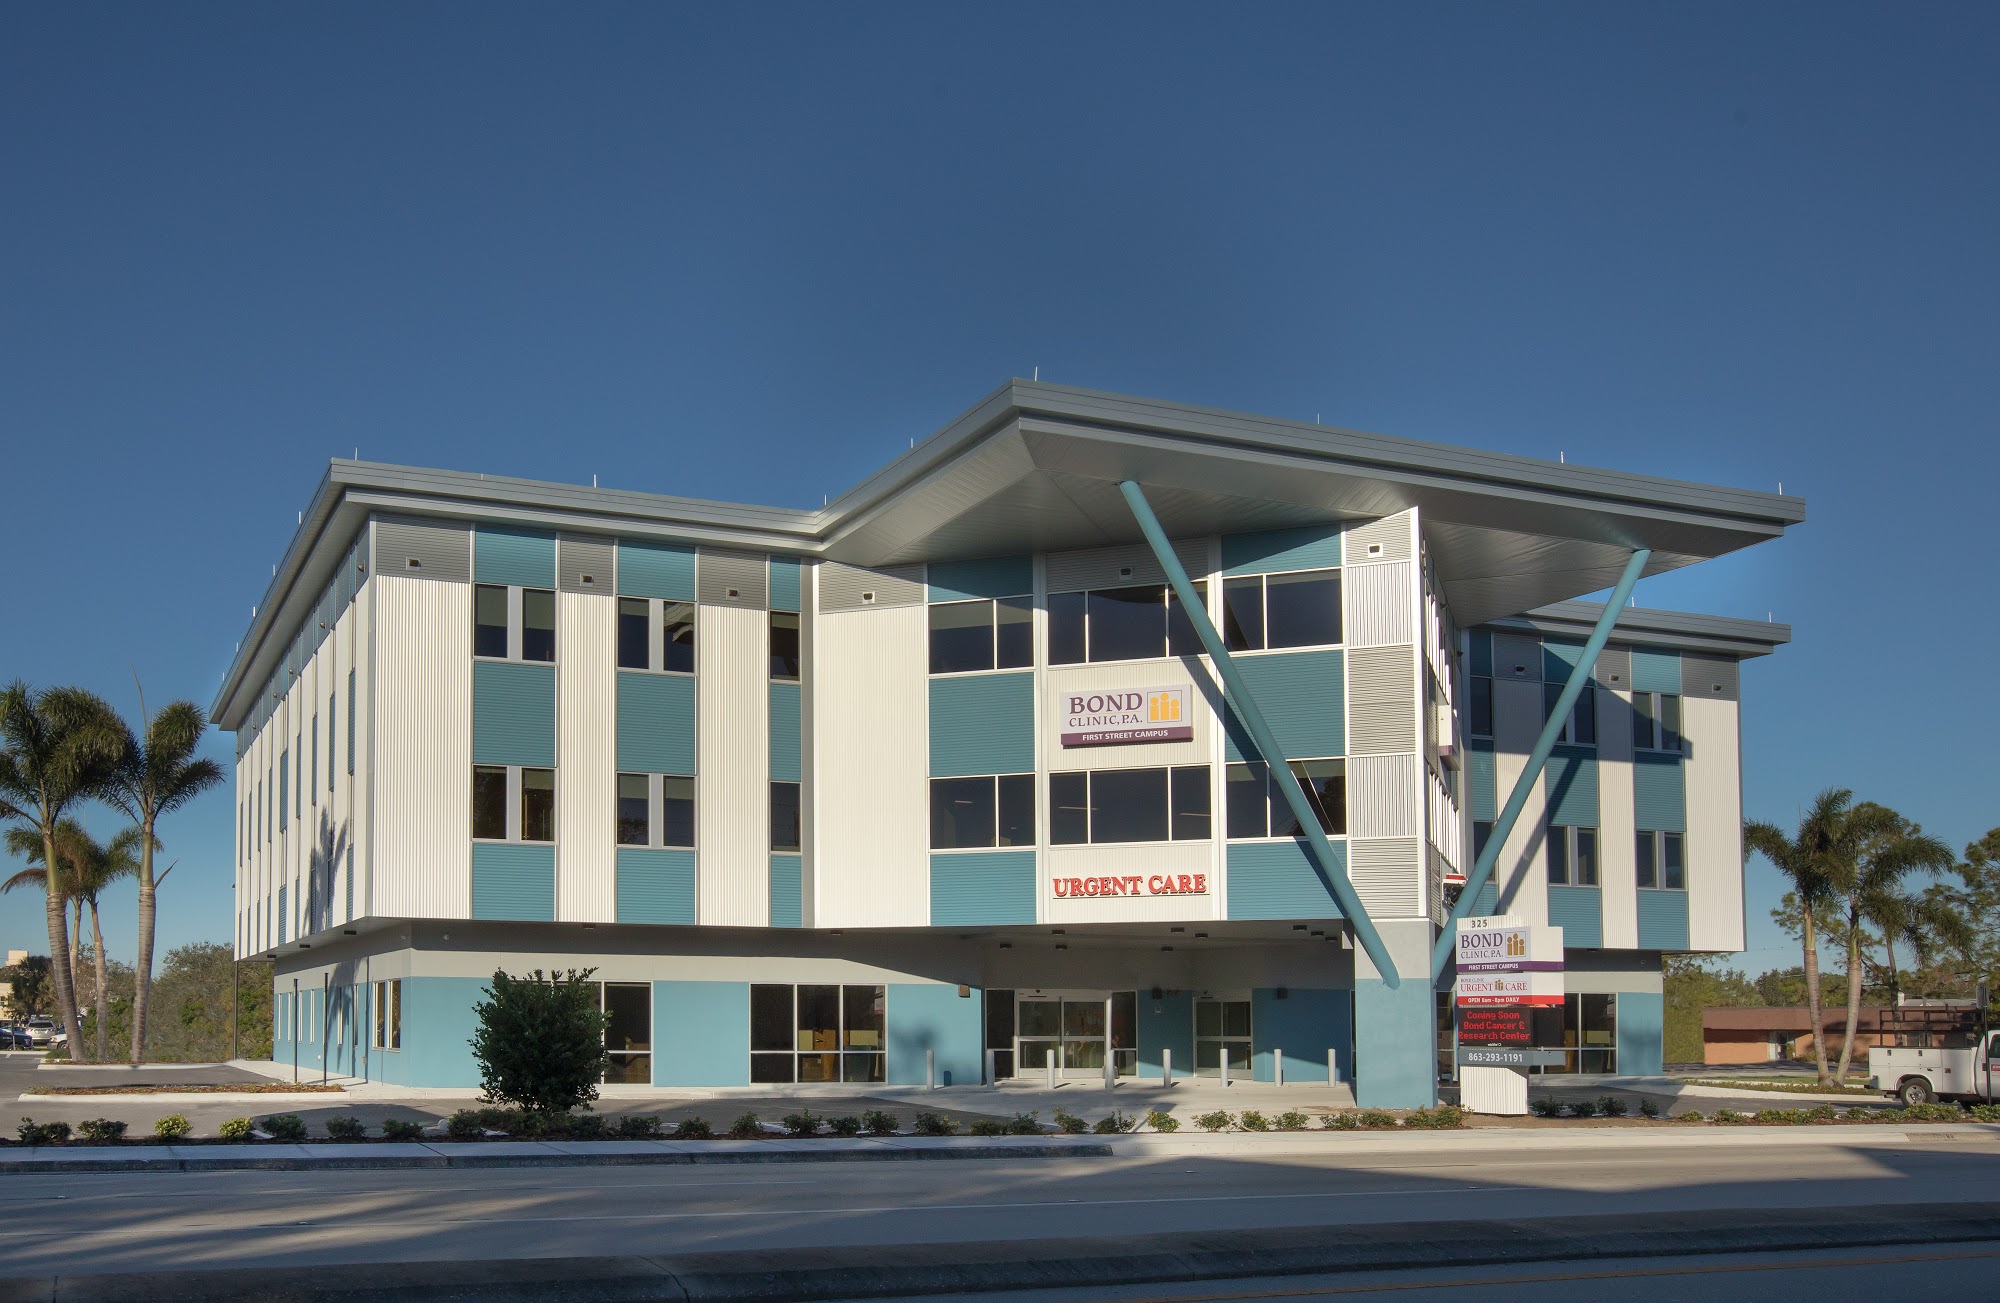 Bond Clinic, P.A. – First Street Campus